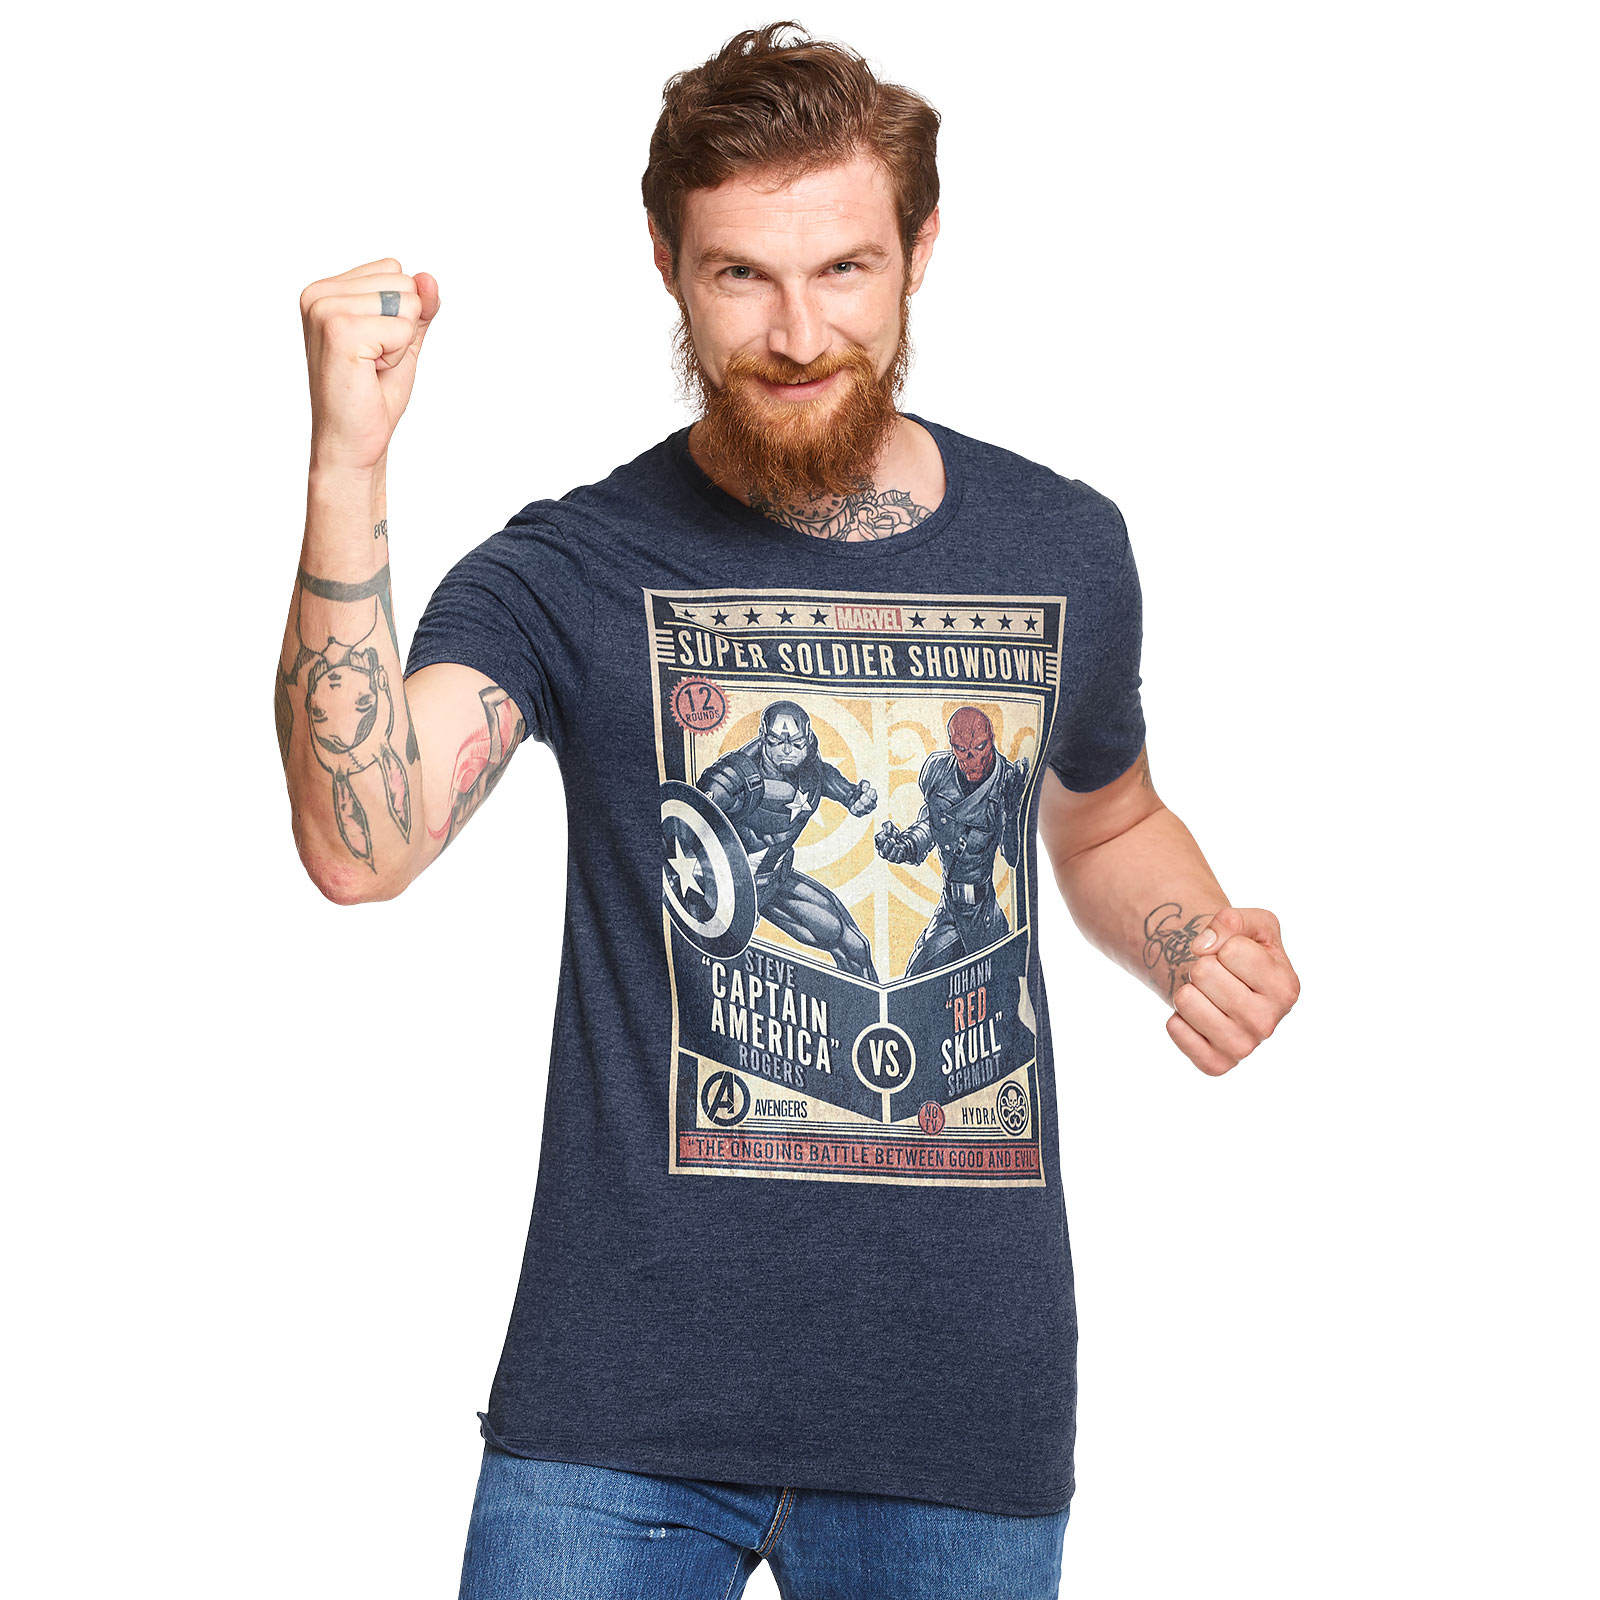 Captain America - Super Soldier Showdown T-Shirt blau